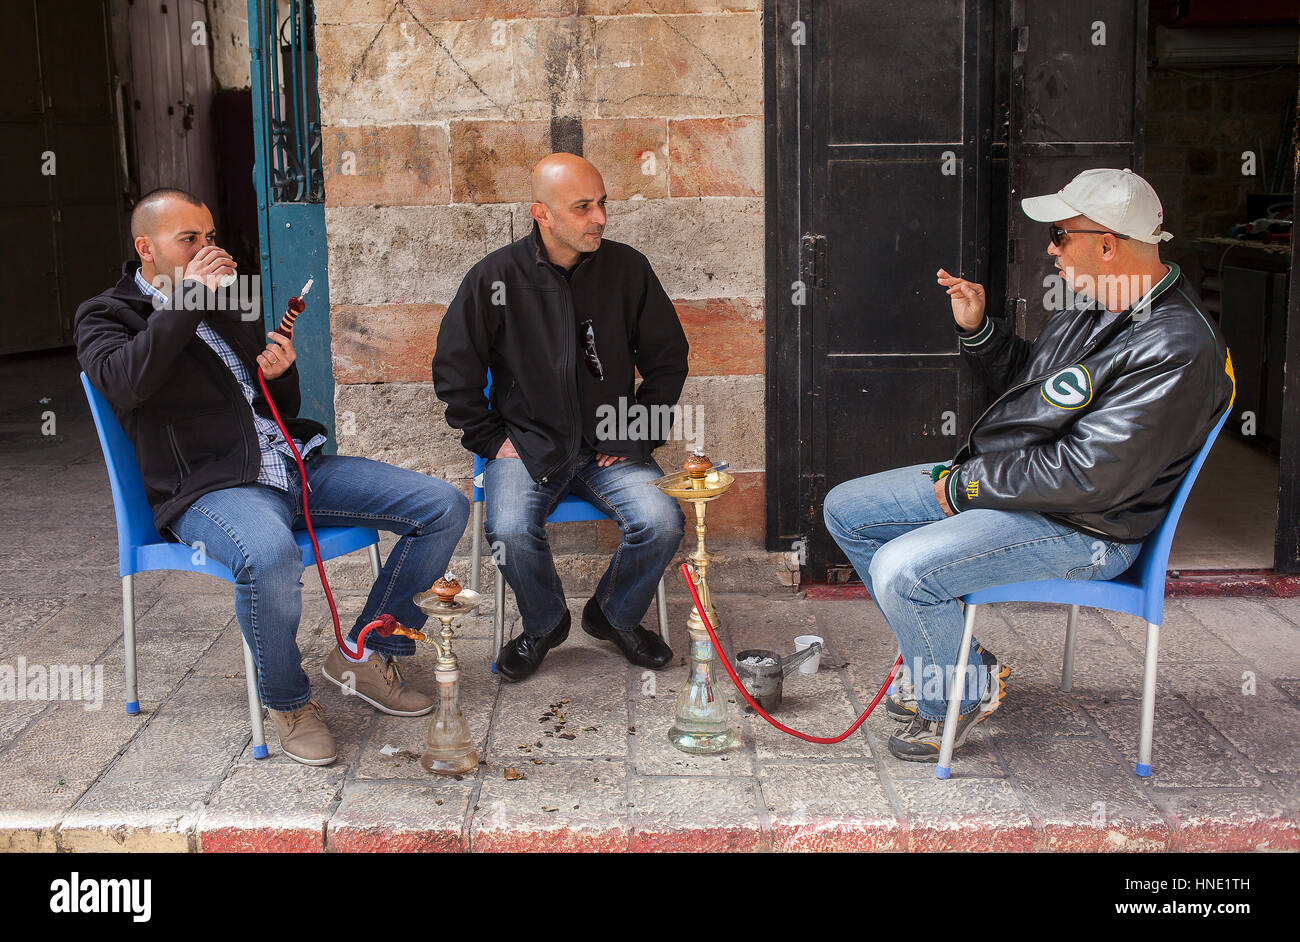 Street scene, arab men smoking Nargila water pipe in the market area of the Muristan called Suq Aftimos, Old City, Jerusalem, Israel. Stock Photo